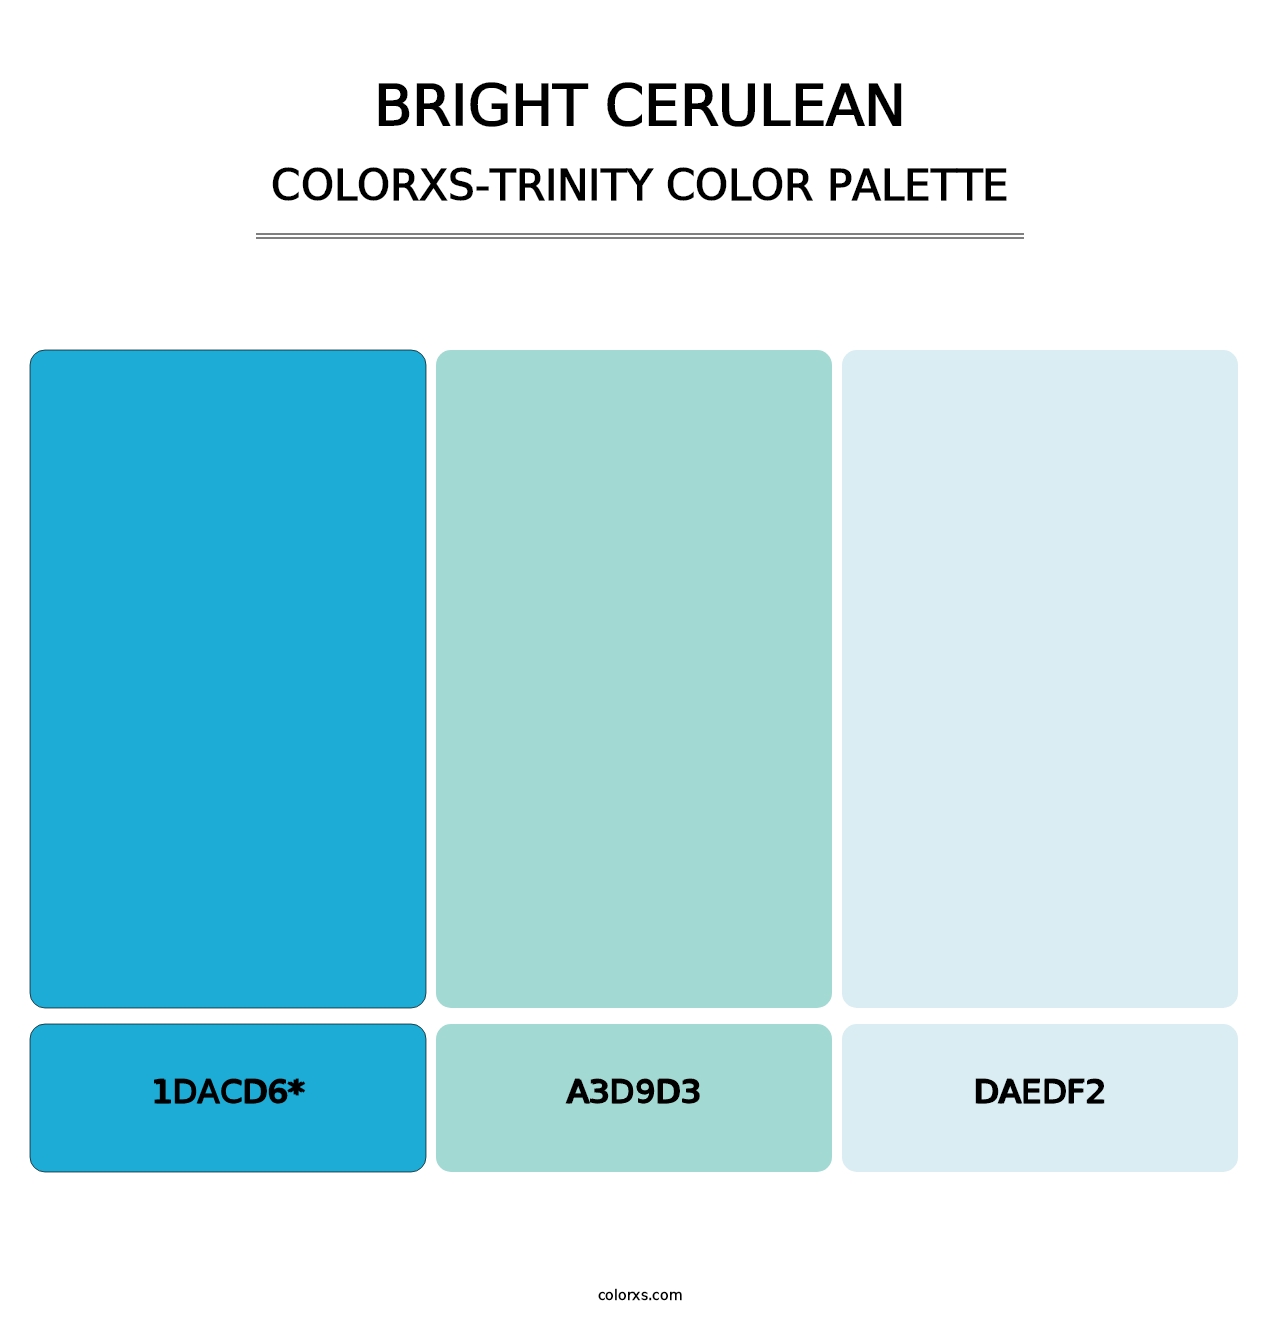 Bright Cerulean - Colorxs Trinity Palette